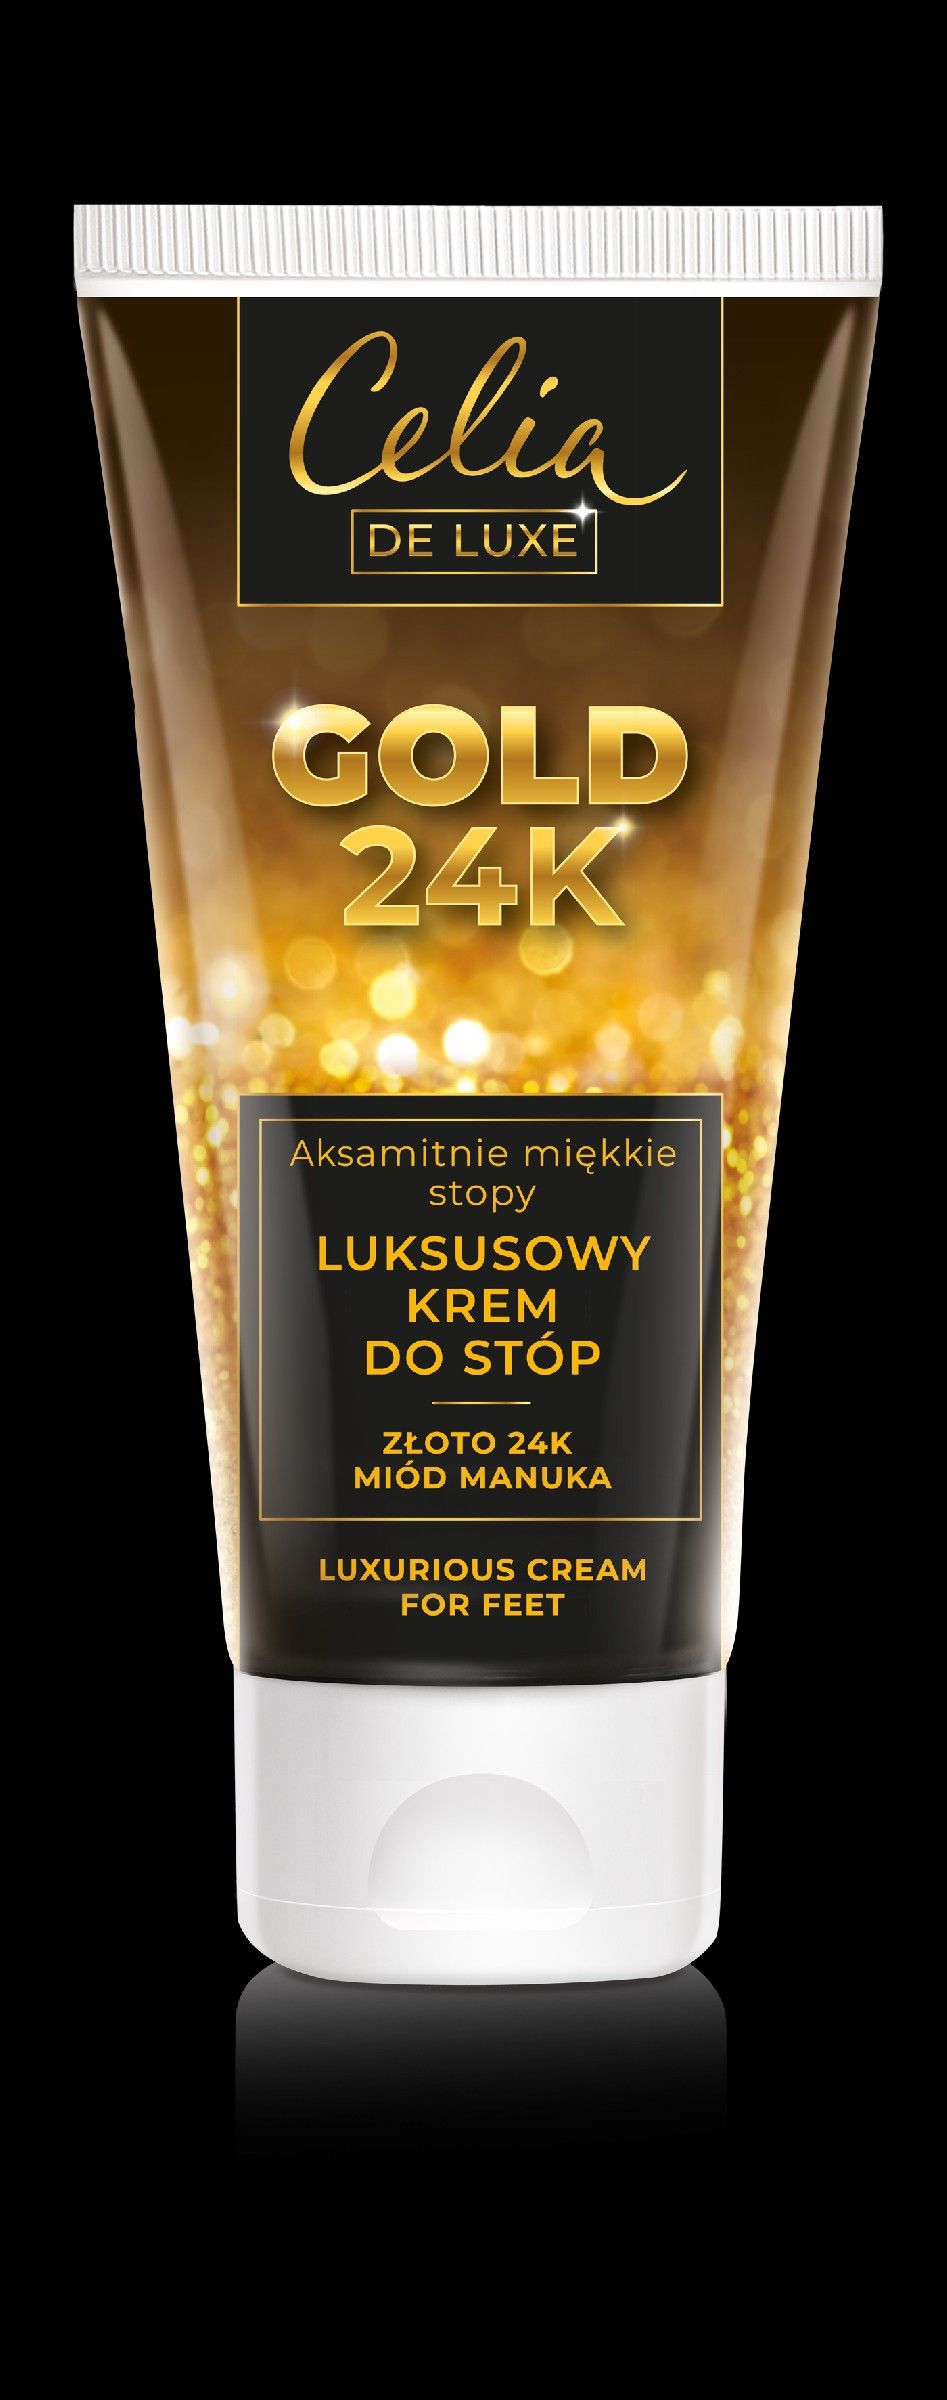 Celia De Luxe Gold 24K luksusowy krem do stop Miod Manuka 80ml 5900525065490 (5900525065490) Roku, pēdu kopšana